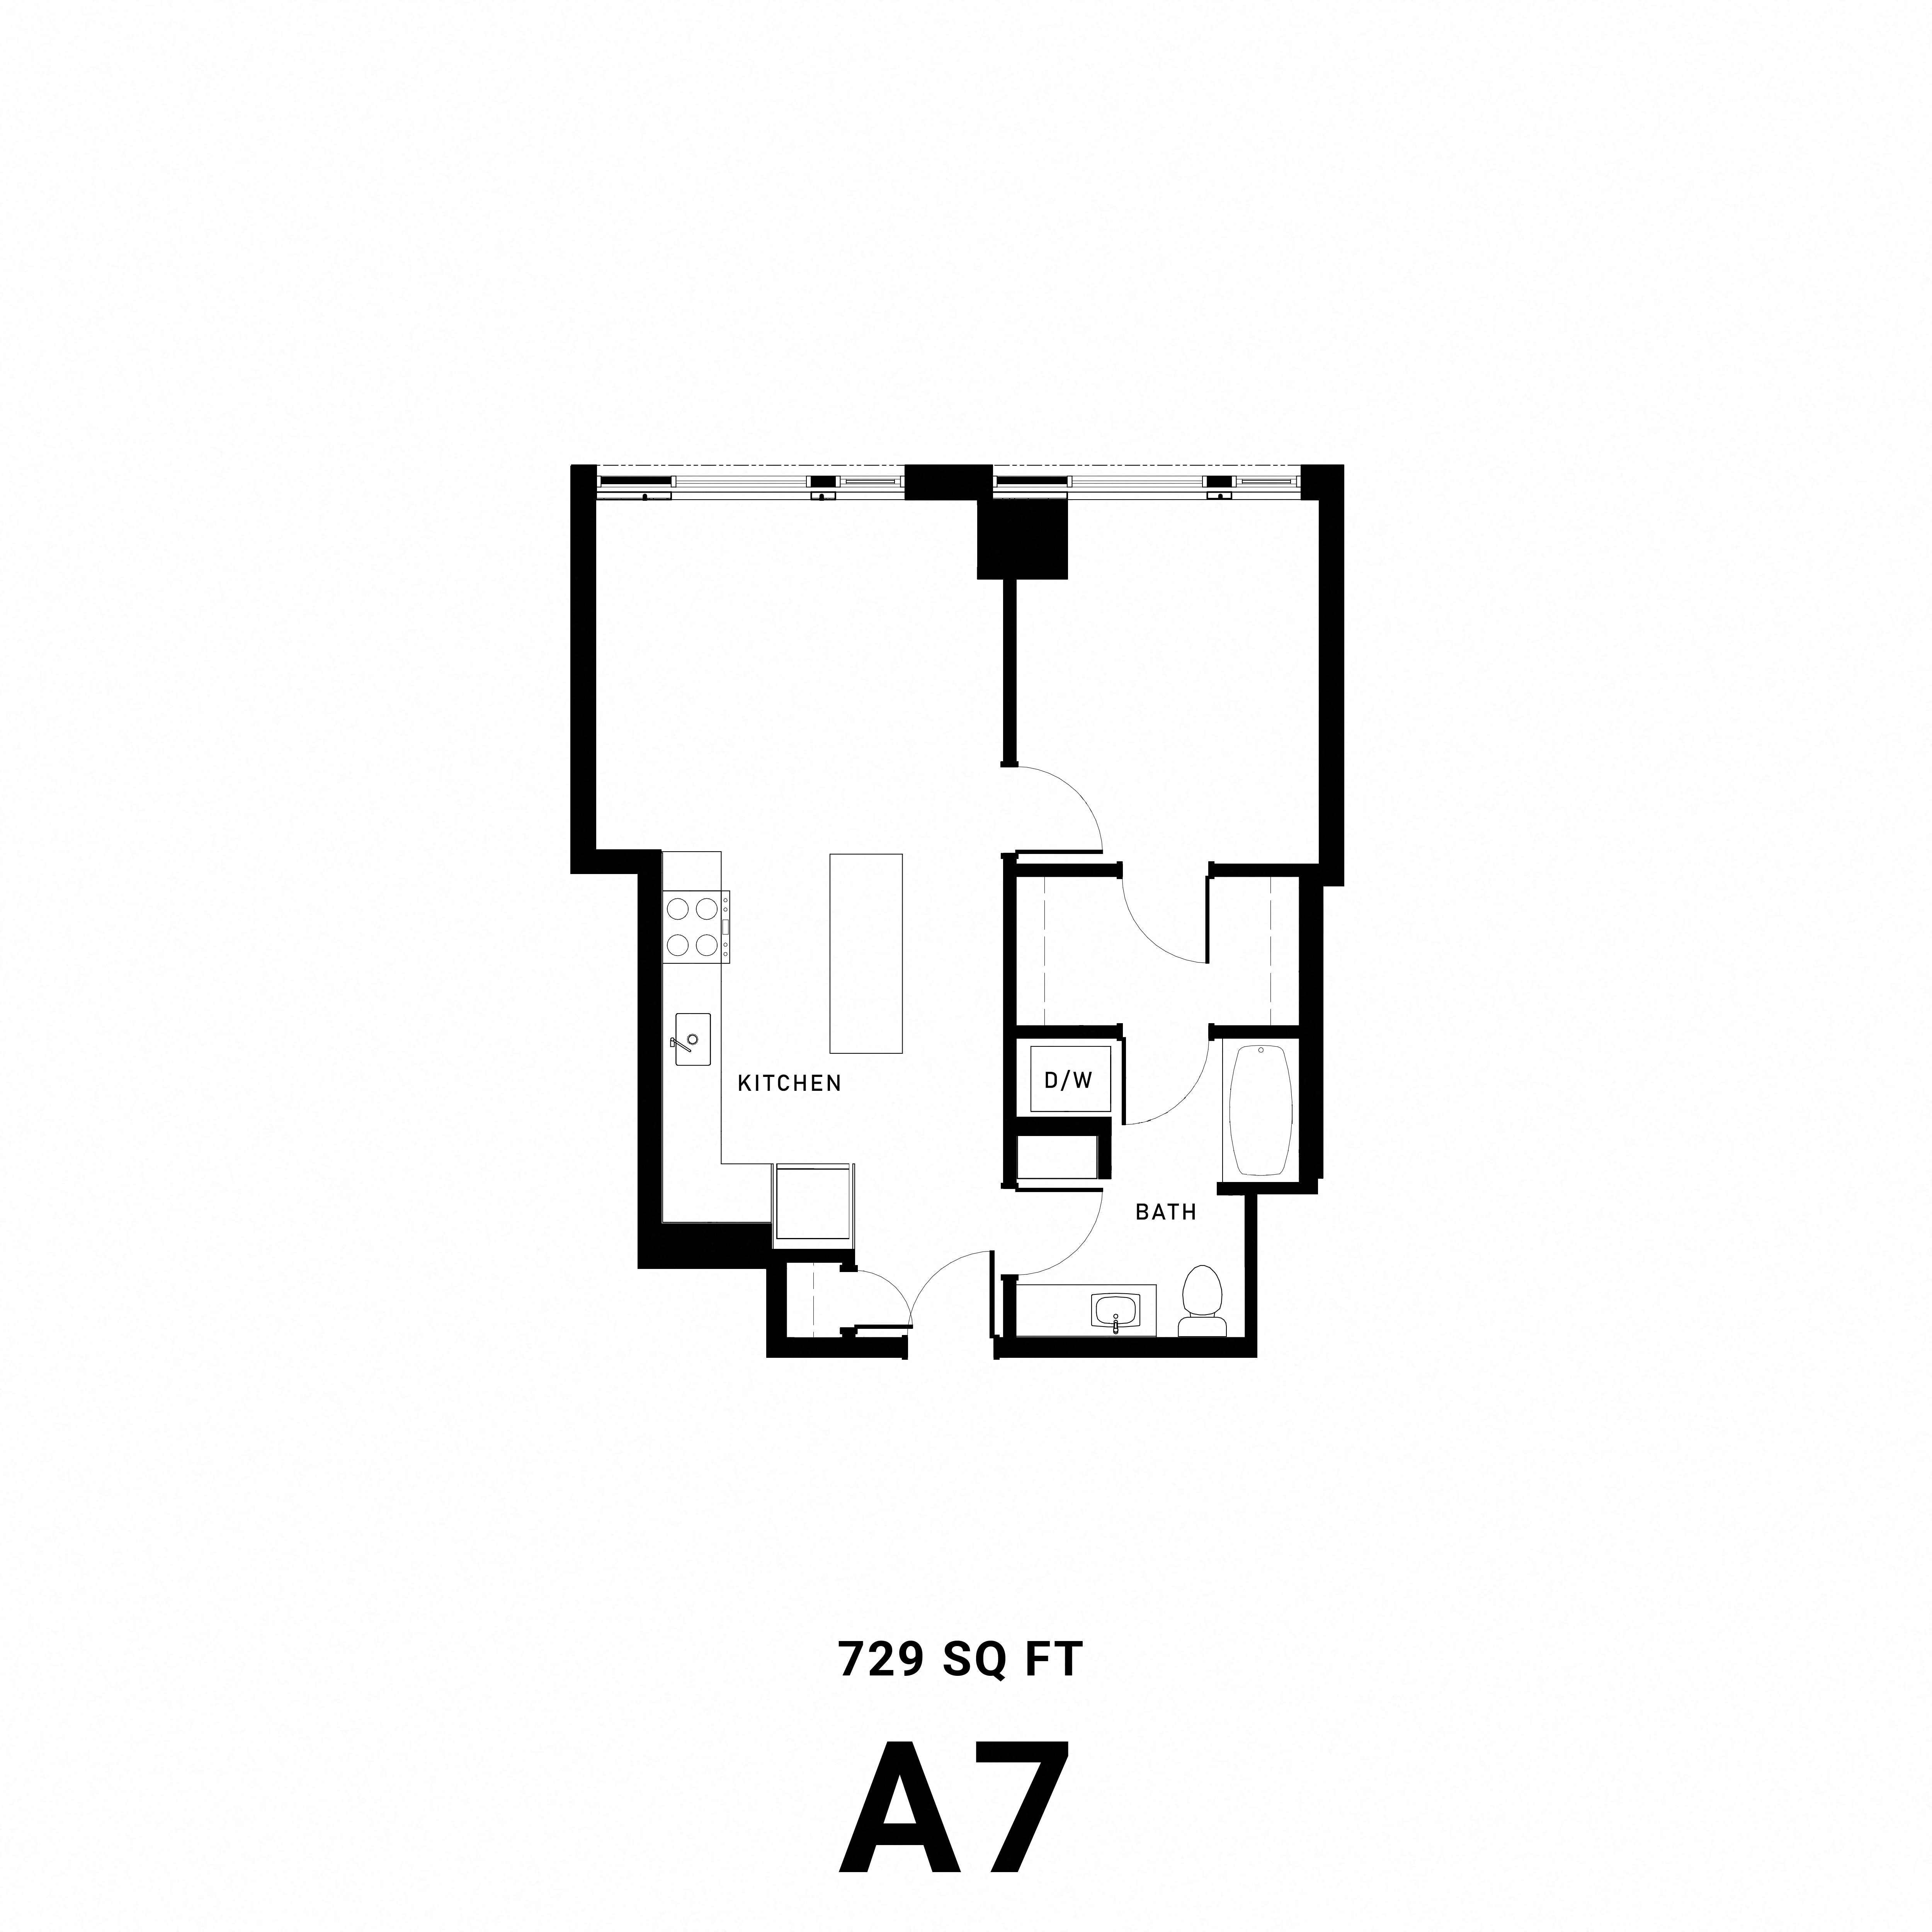 Floorplan A7